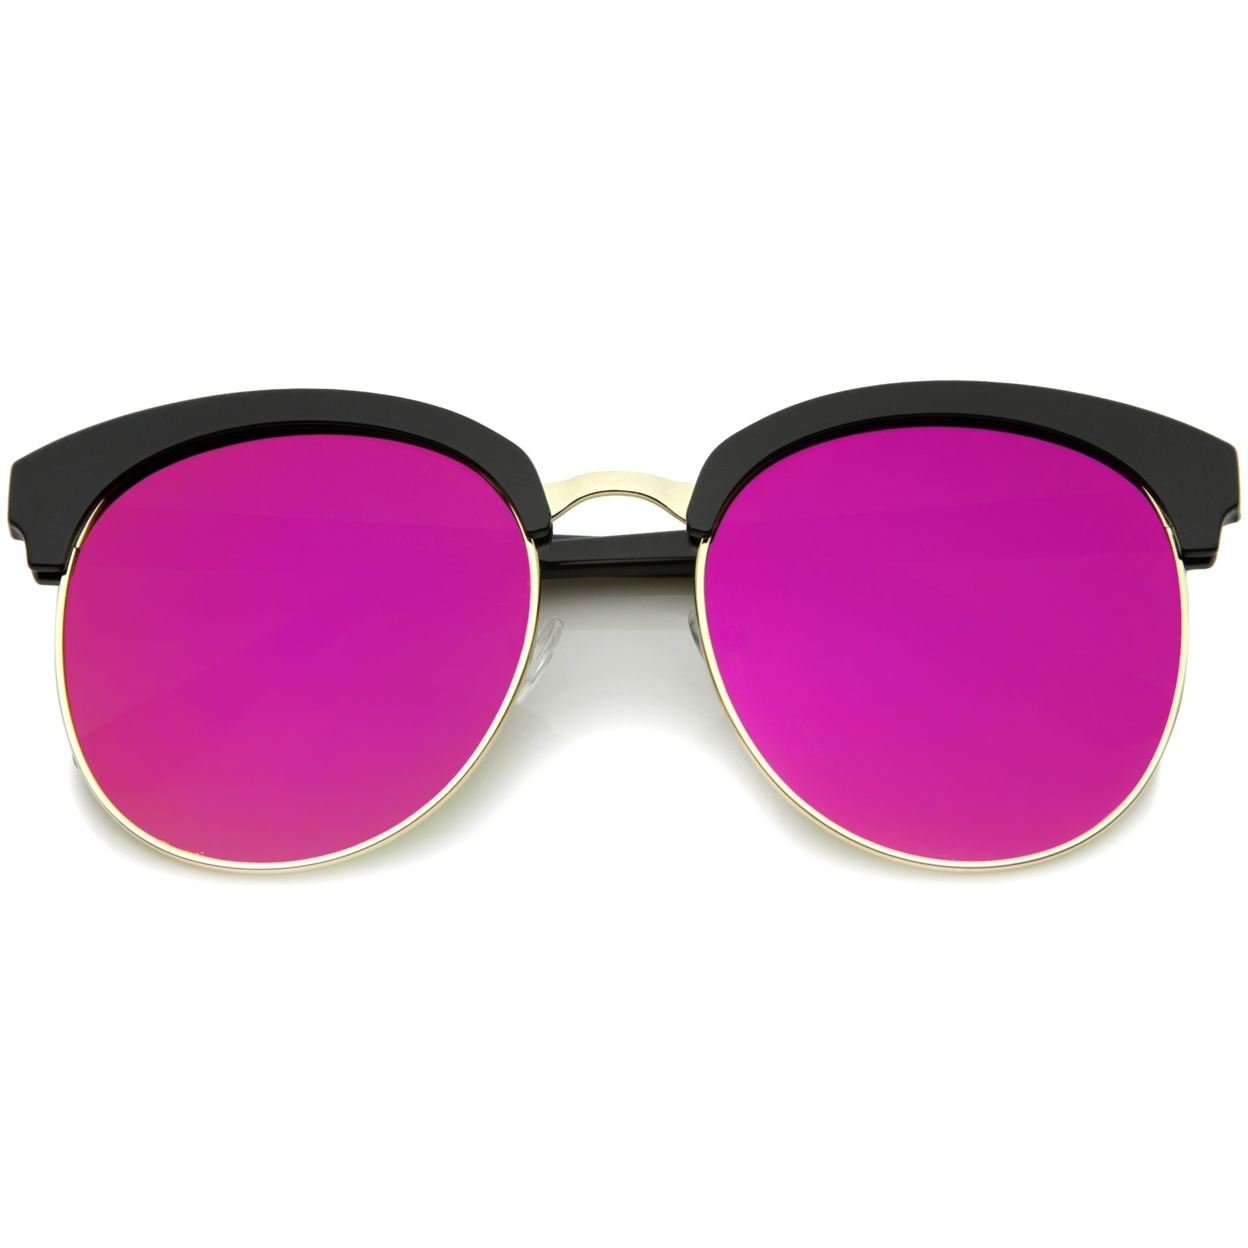 Womens Oversize Half-Frame Mirrored Flat Lens Round Sunglasses 68mm - Tortoise-Gold / Orange Mirror